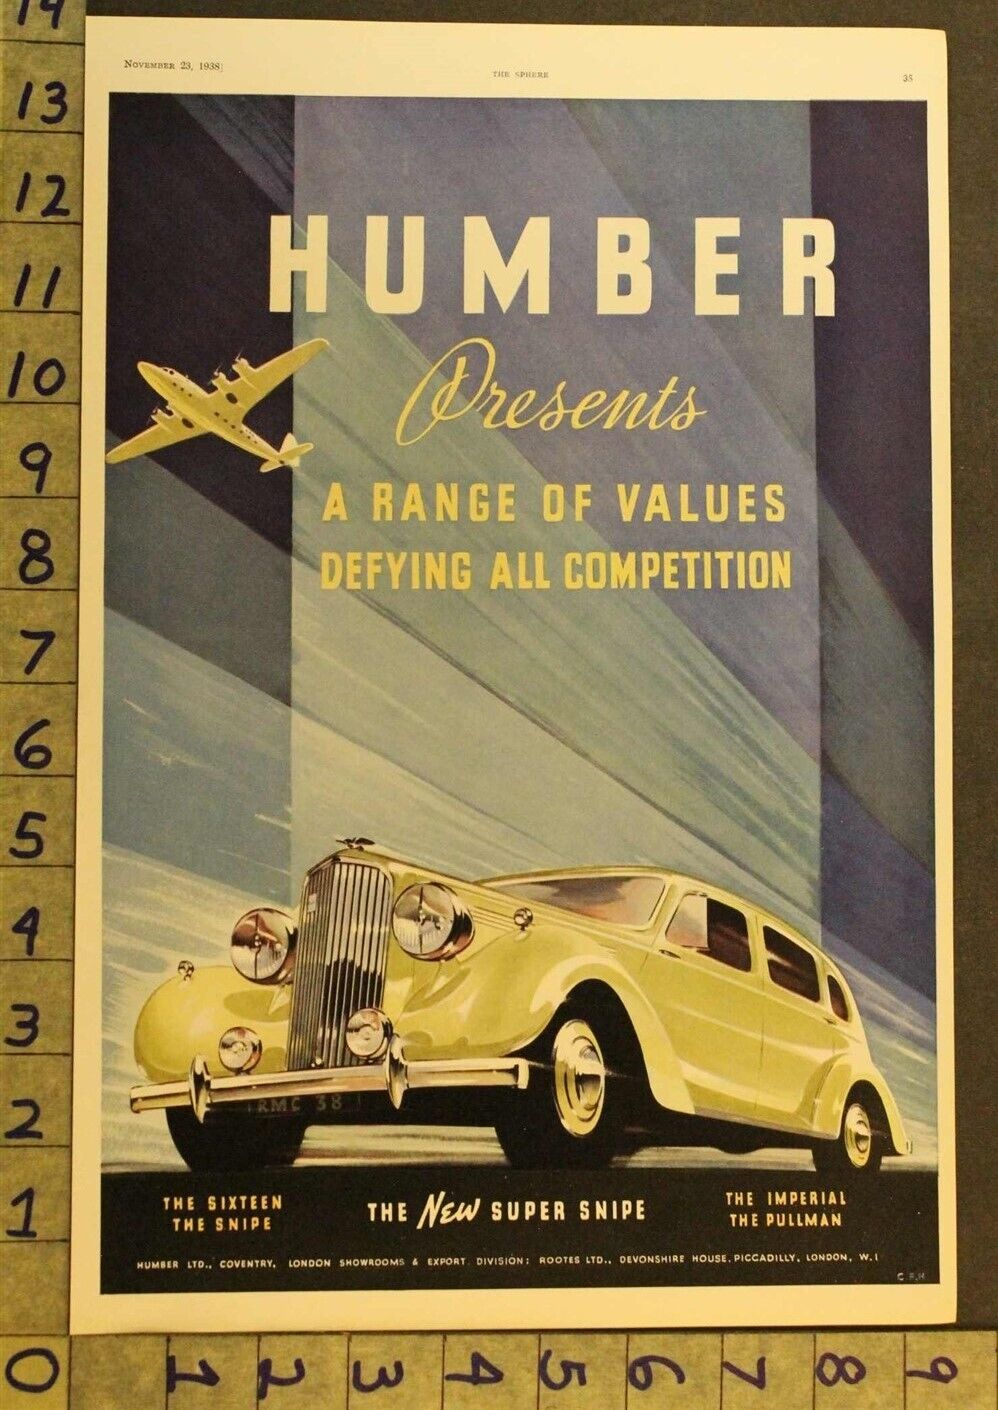 1938 HUMBER SIXTEEN SNIPE IMPERIAL PULLMAN LONDON AVIATION MOTOR CAR AUTO ADUK84